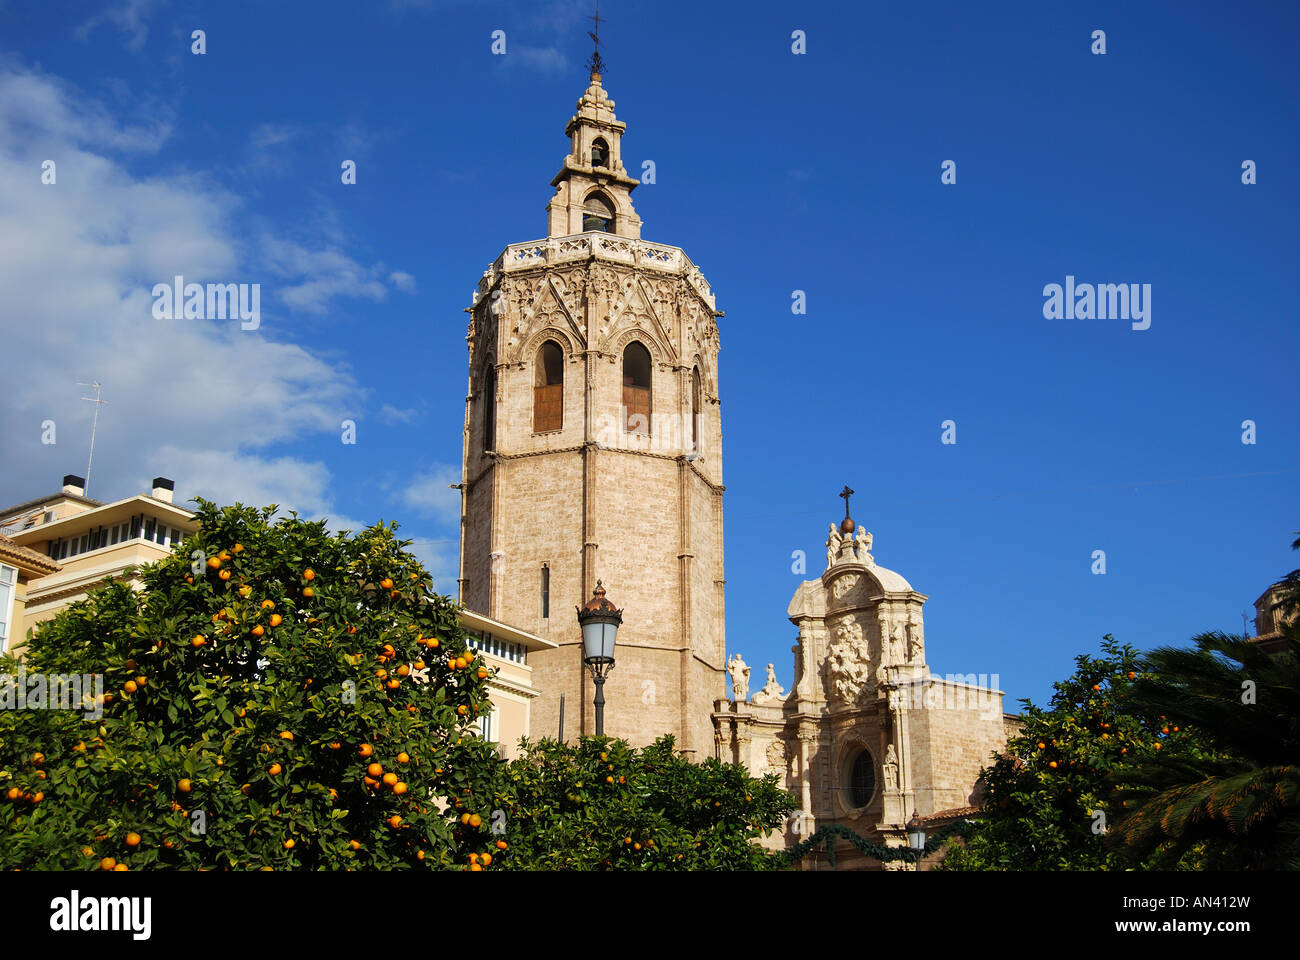 The Cathedral and Belfry Tower, Plaza de La Reina, Valencia, Costa del Azahar, Valencia Province, Spain Stock Photo